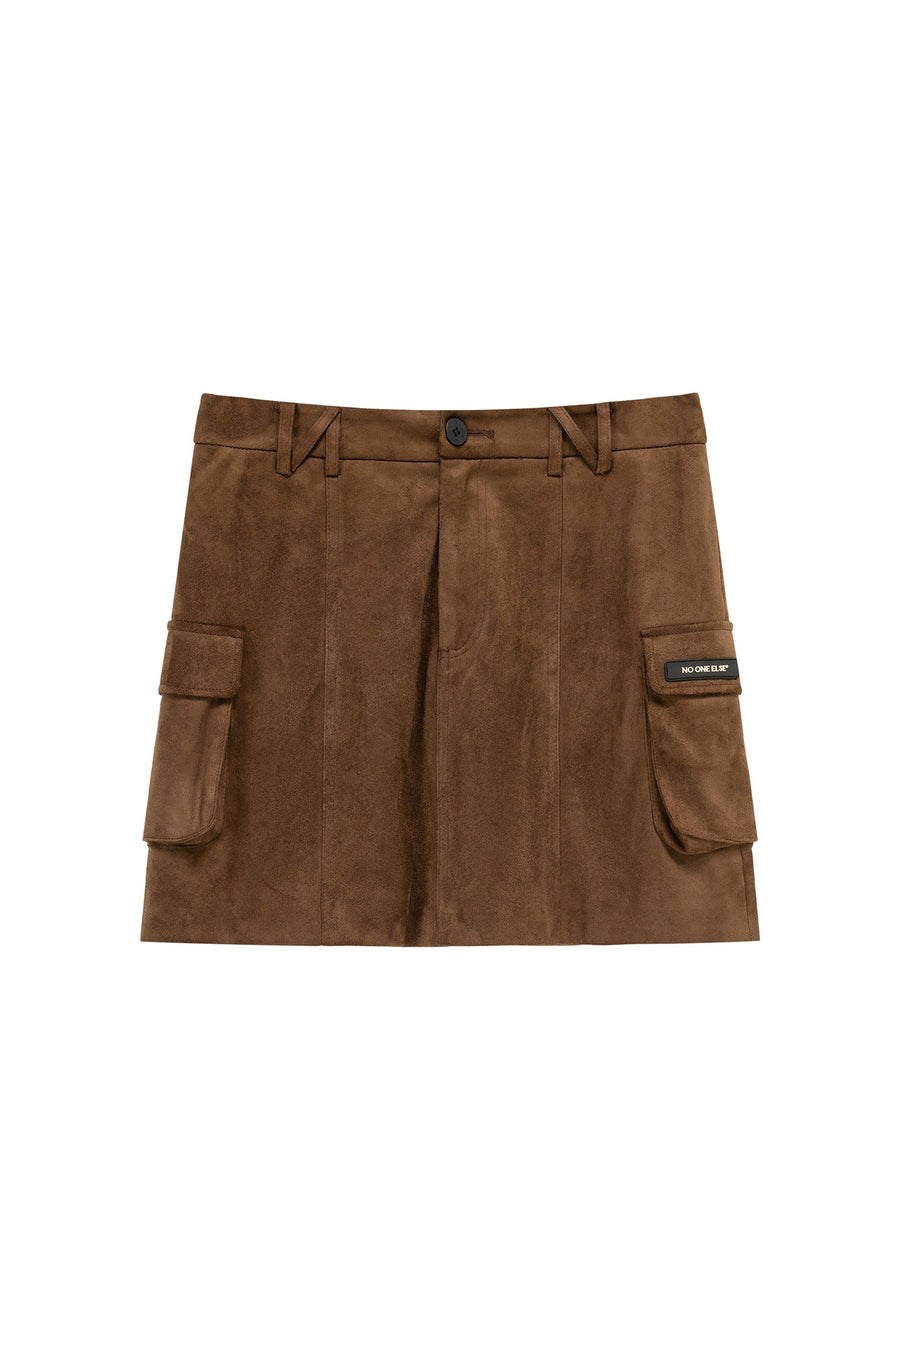 CHUU Pocket Zipper Leather Skirt